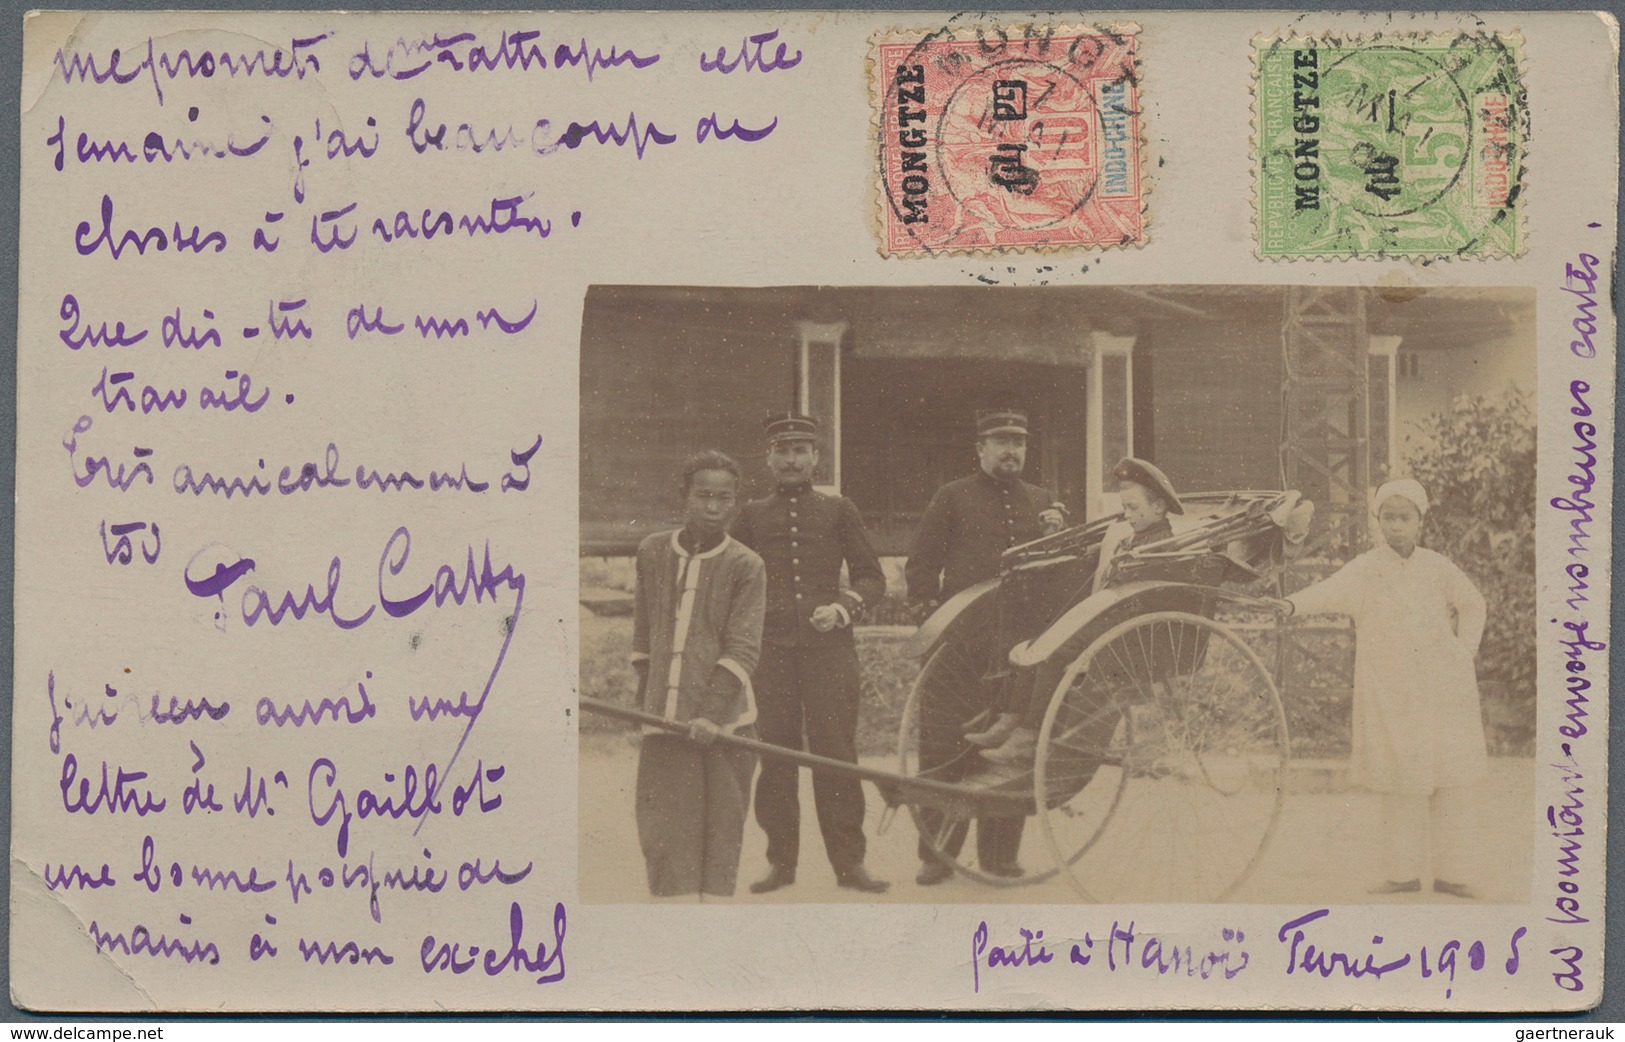 22581 Französisch-Indochina - Postämter in Südchina: 1902/1909, assortment of 32 covers/cards bearing fran